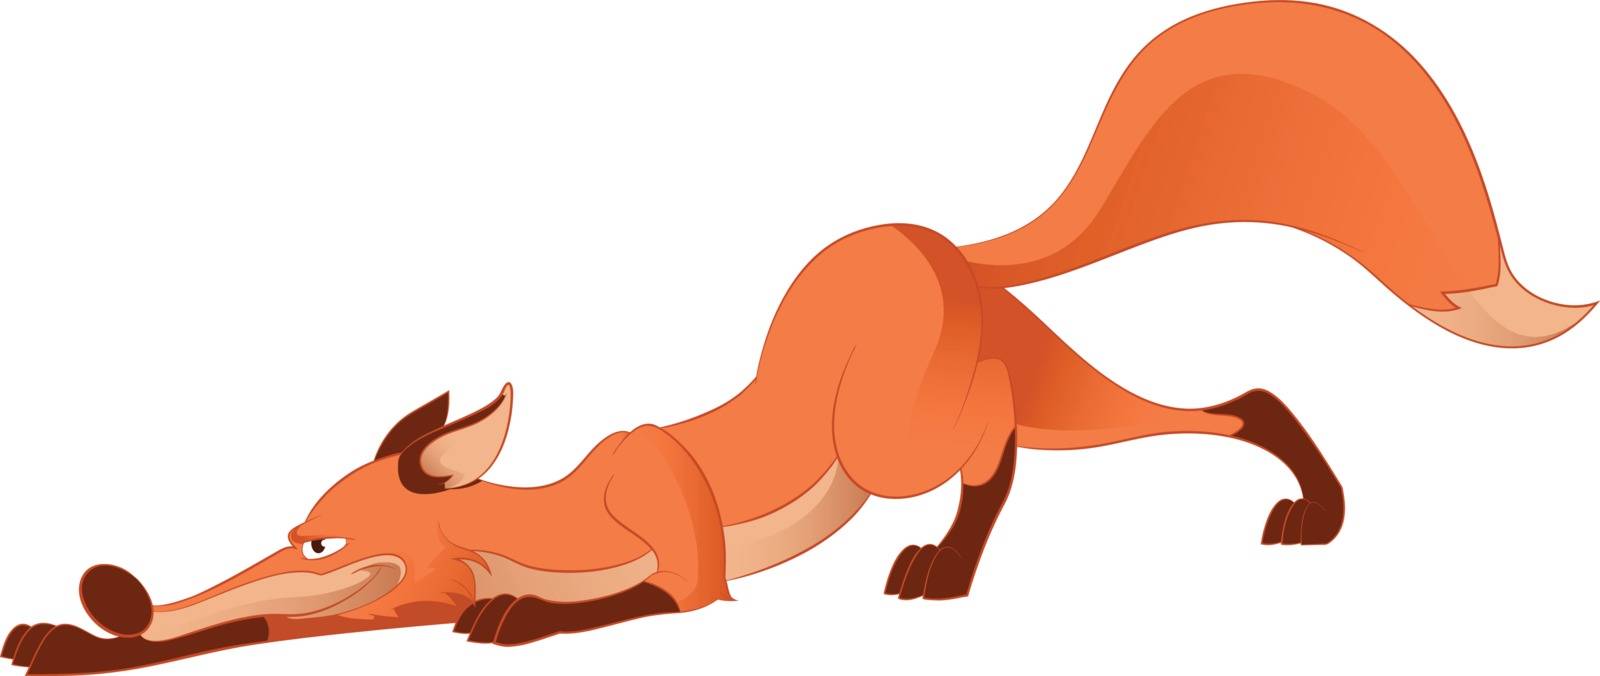 Cartoon fox by Amplion